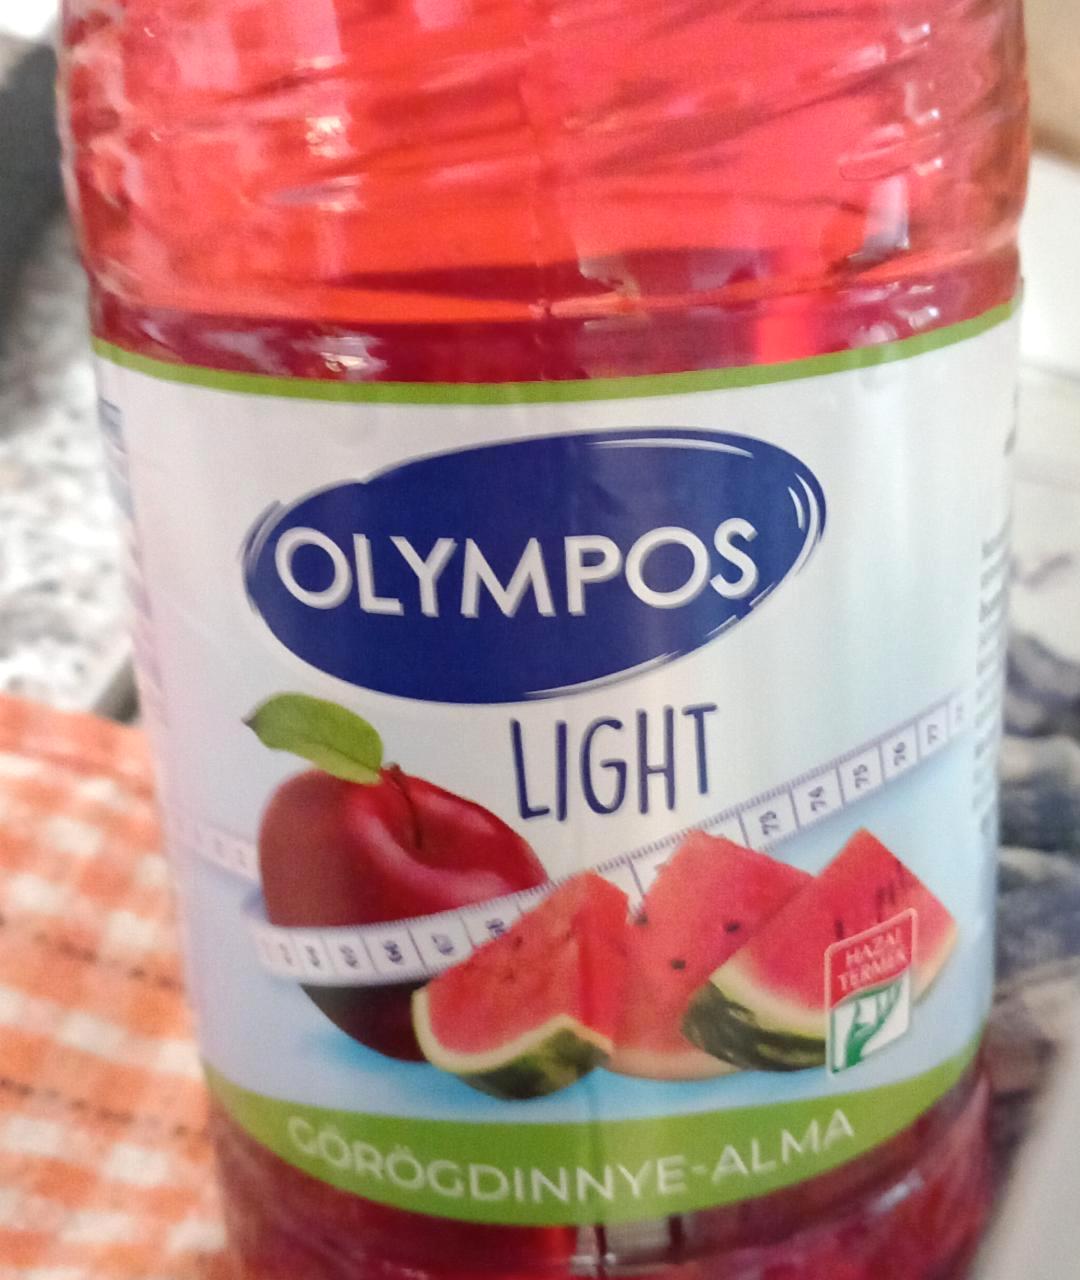 Képek - Görögdinnye - alma Olympos Light